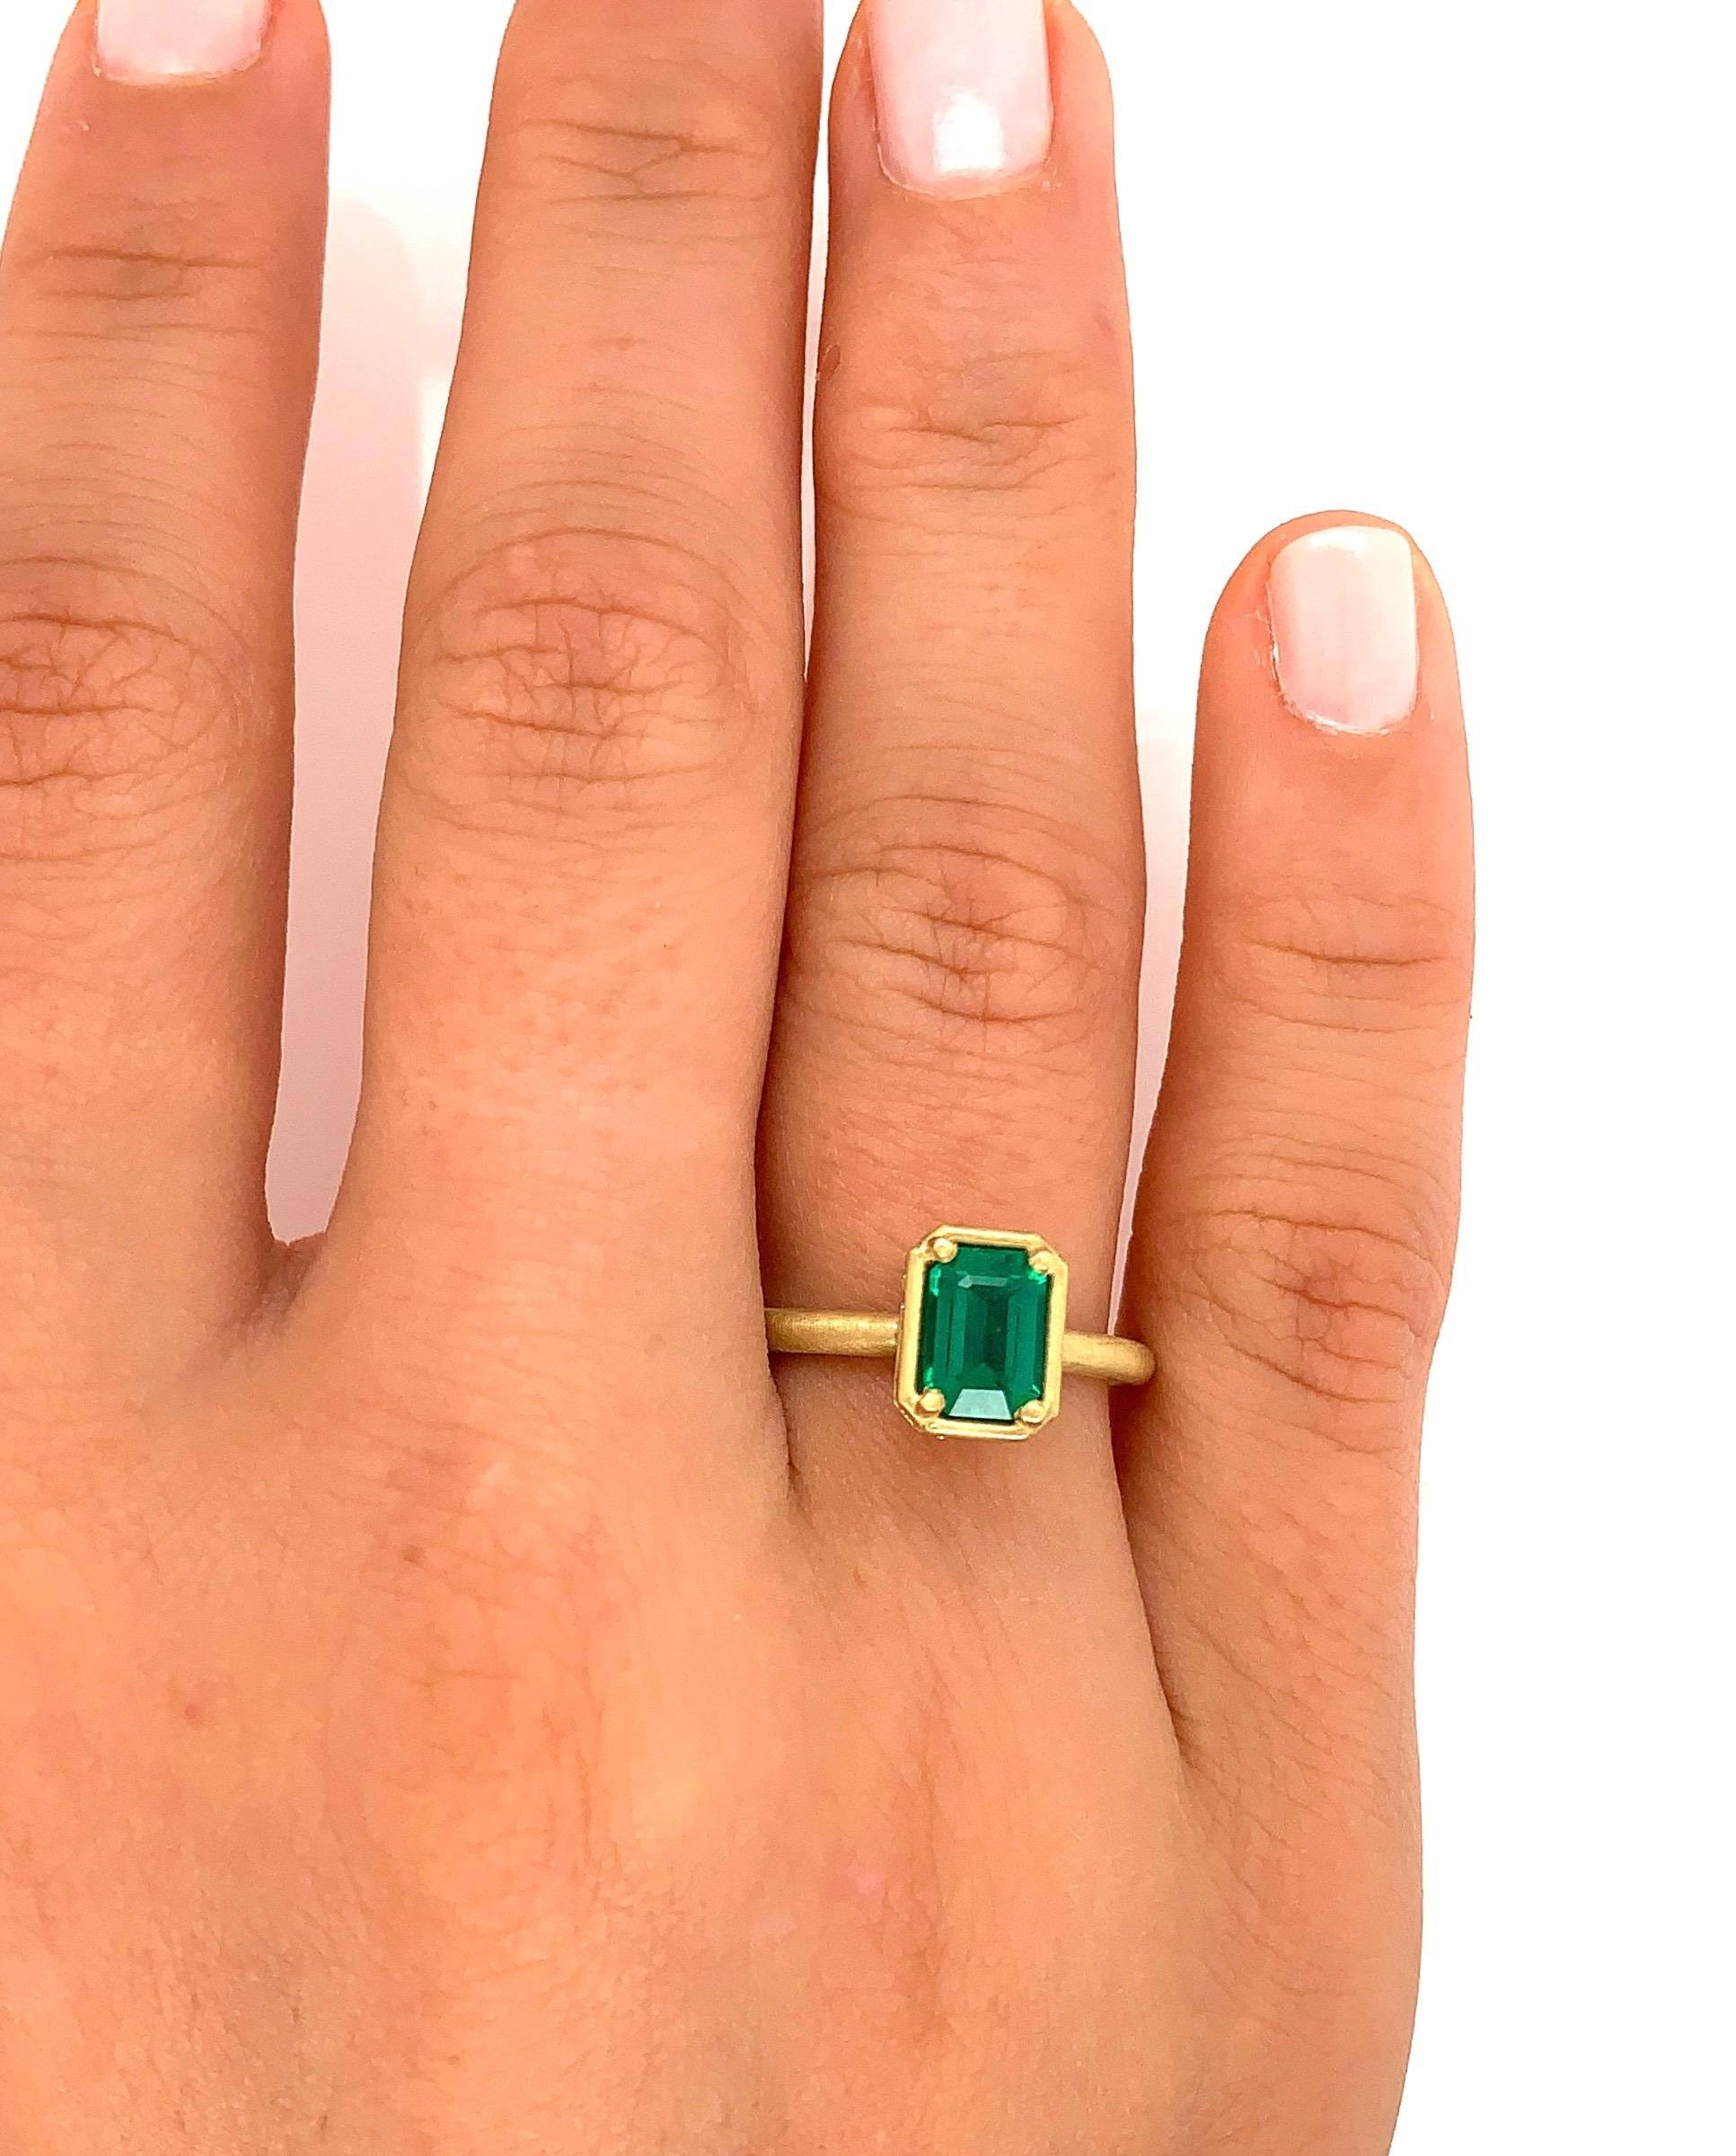 18K Matte Gold Emerald and Diamond Ring
Emerald .76ct Diamond .14ct
Ring size 6